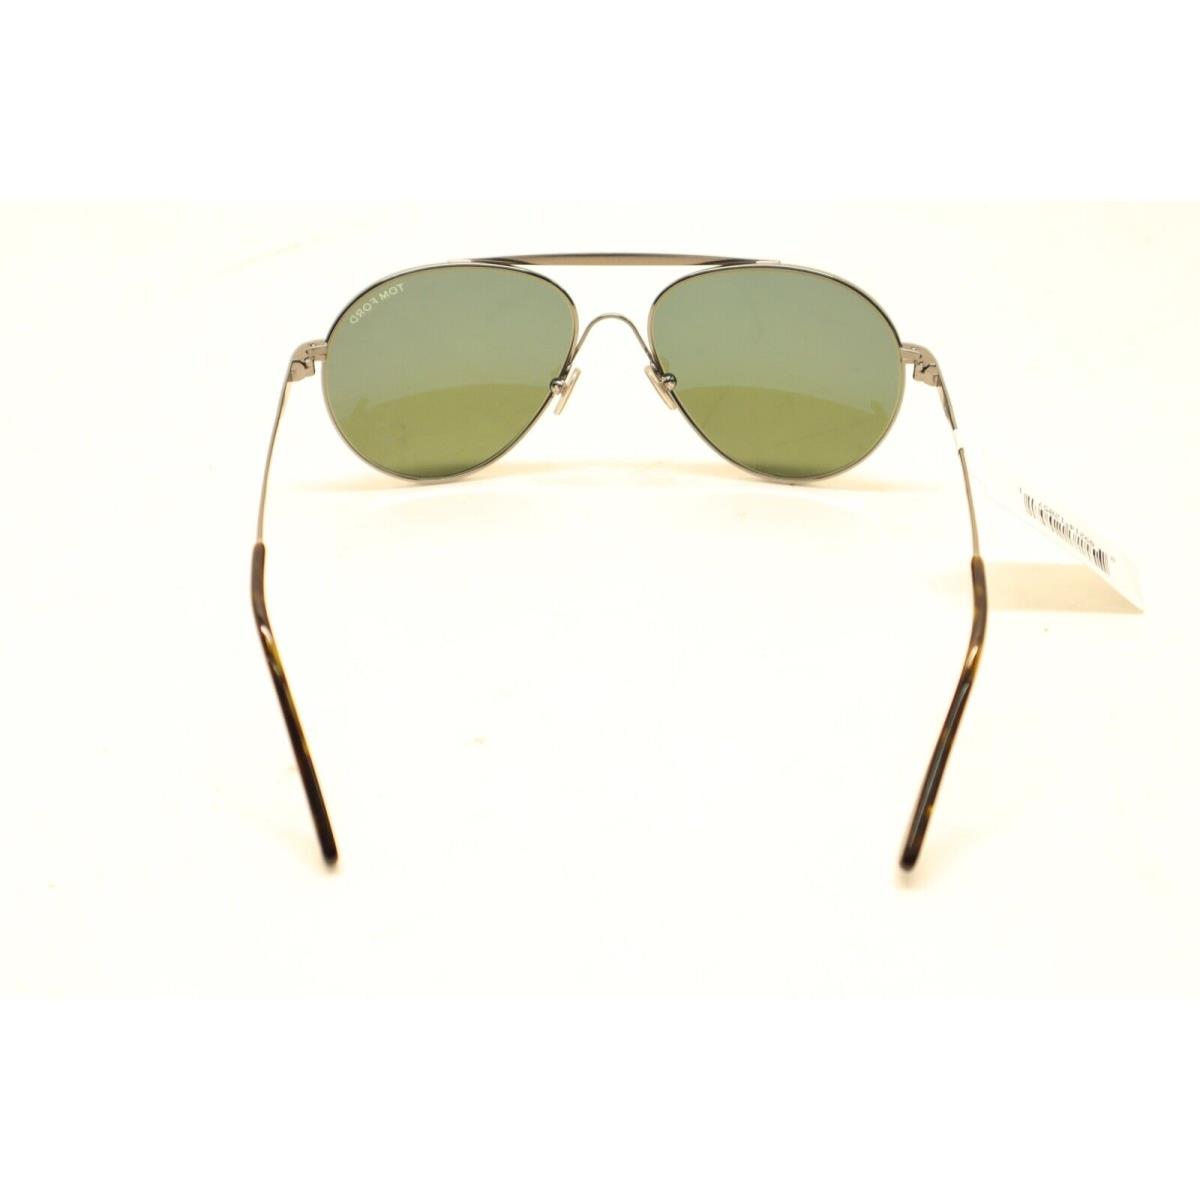 Tom Ford sunglasses Smith - Gray Frame, Green Lens